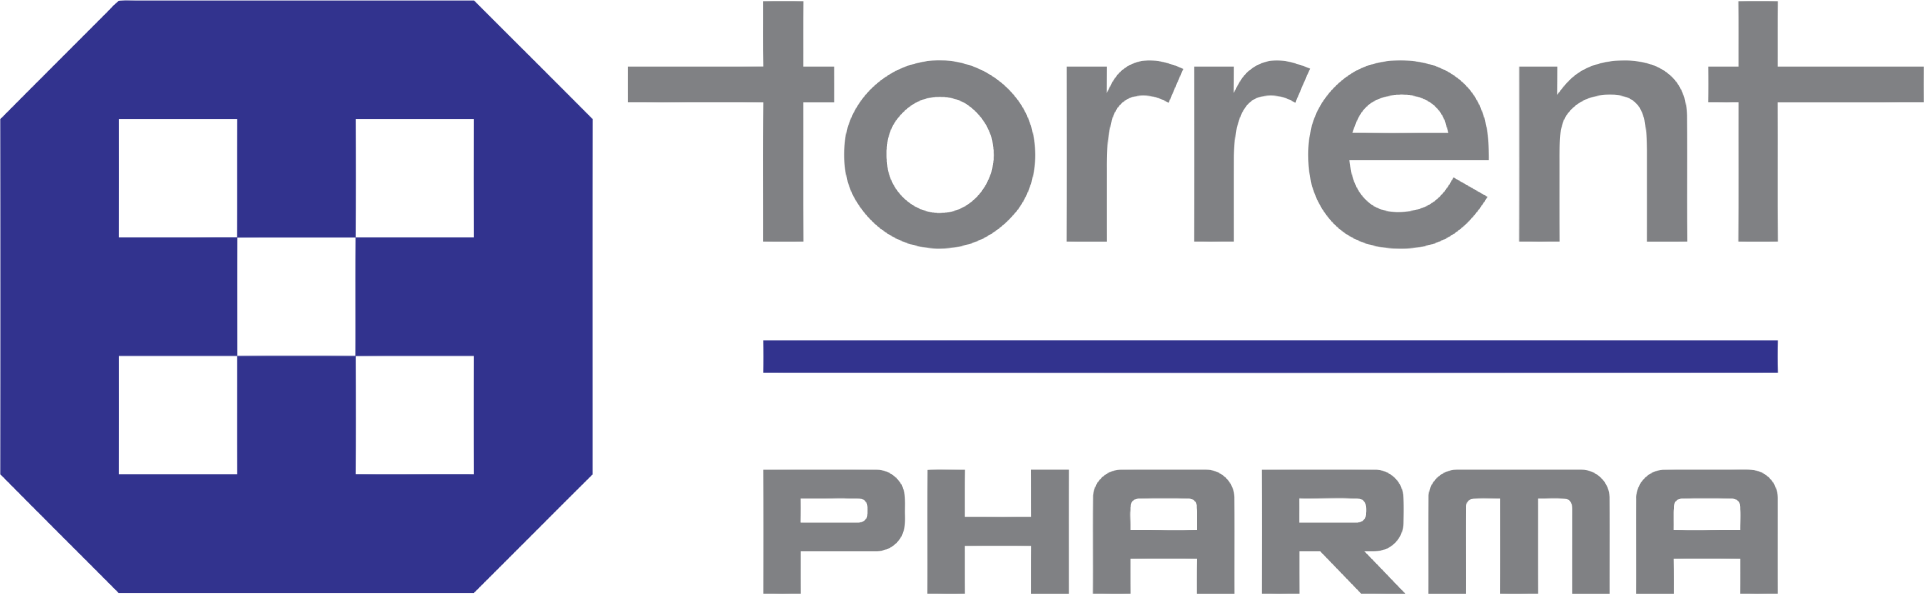 Torrent Pharmaceuticals
 logo large (transparent PNG)